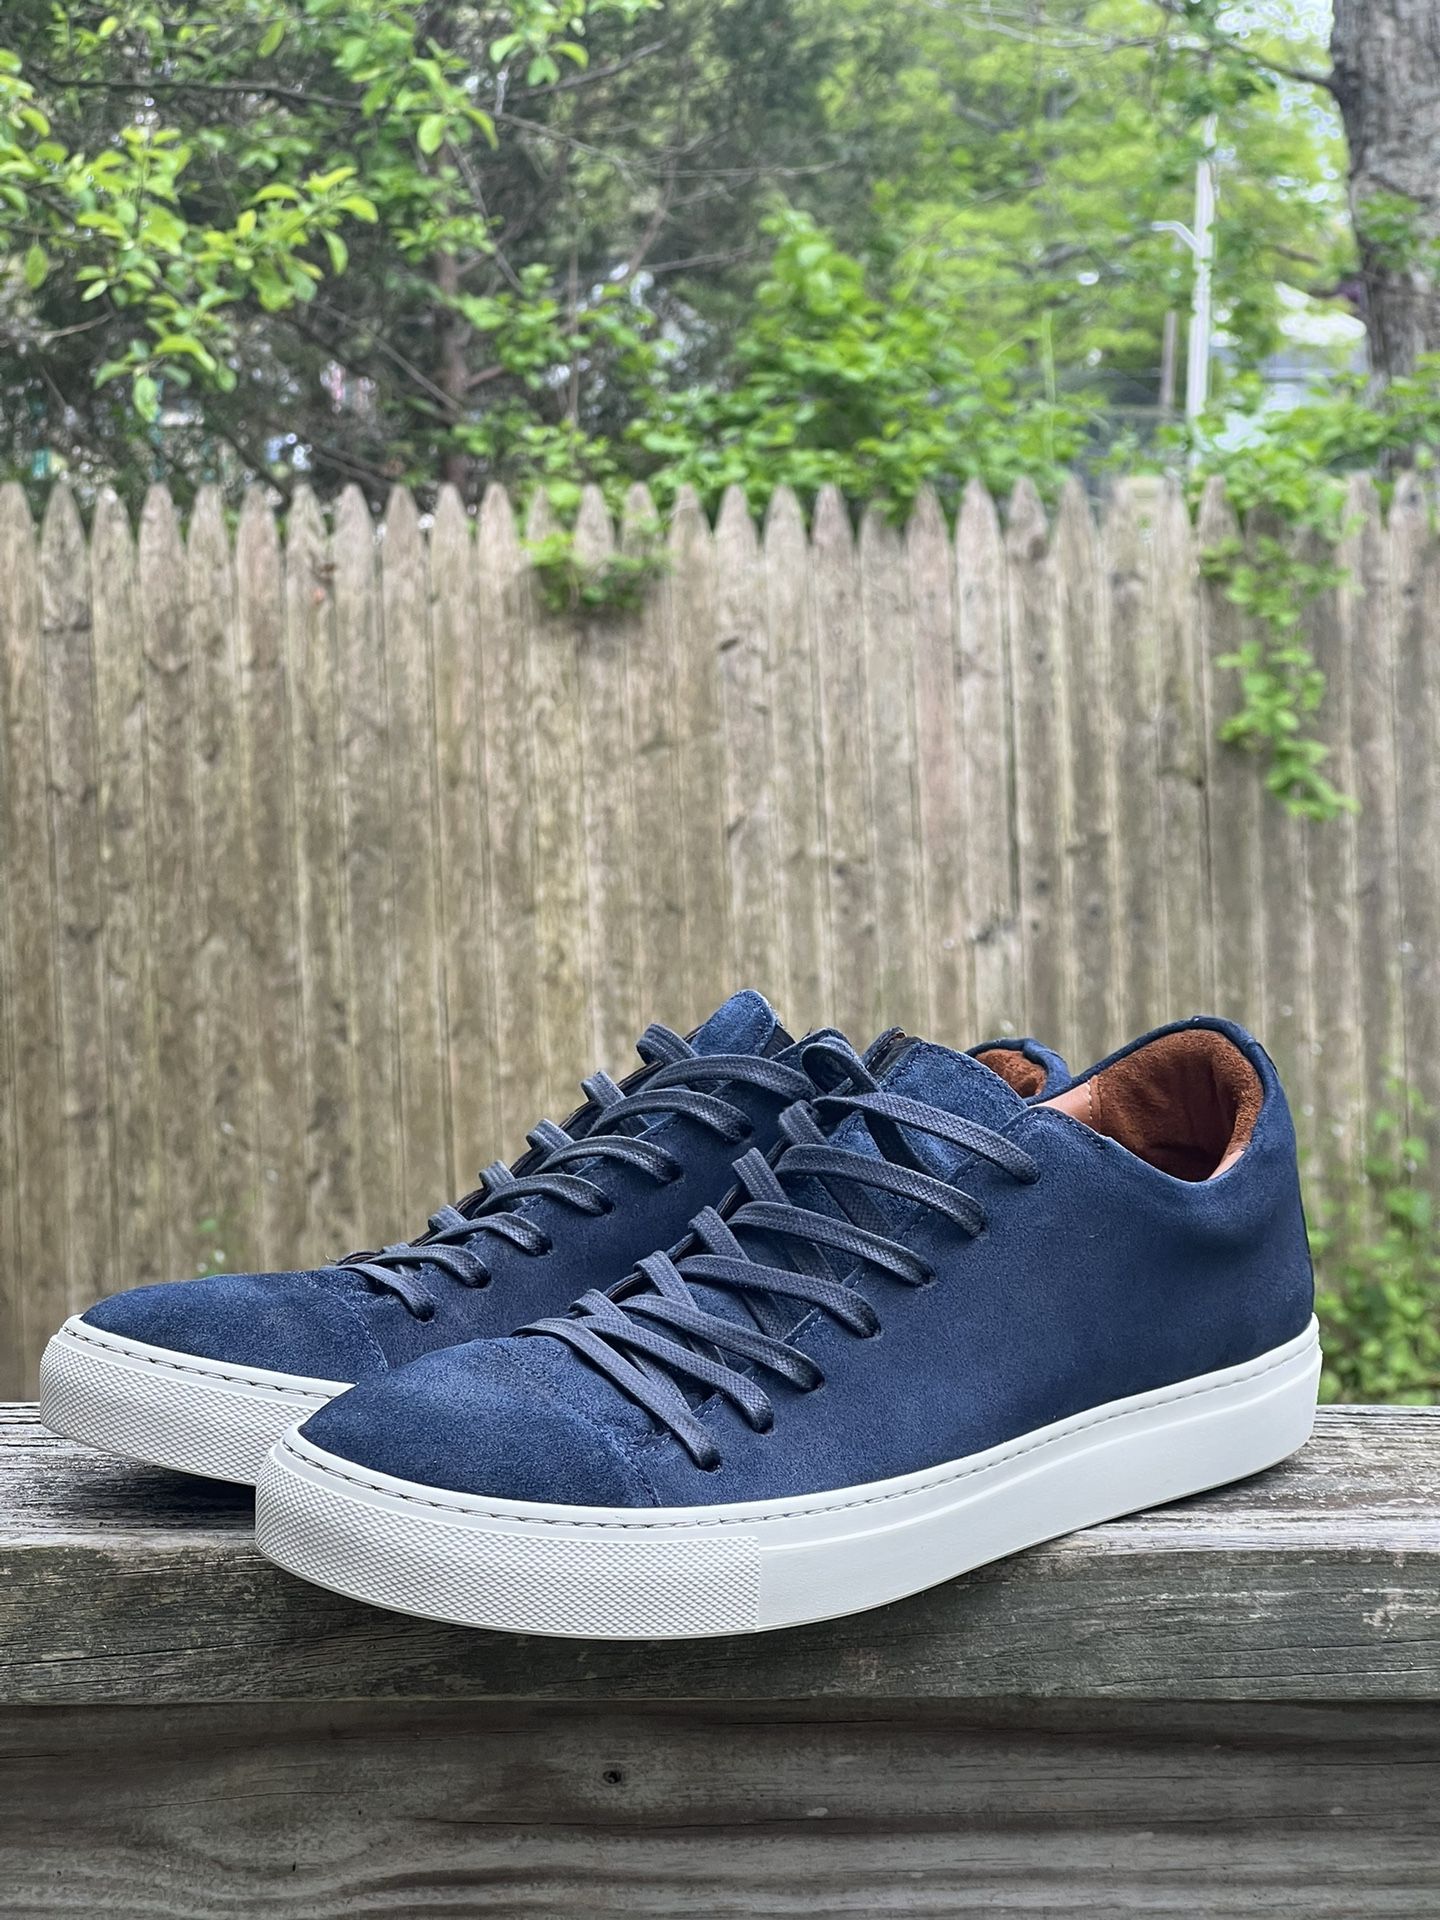 Men’s Size 8 - John Varvatos Reed Blue Canvas Shoes F2754v2 Premium Sneakers